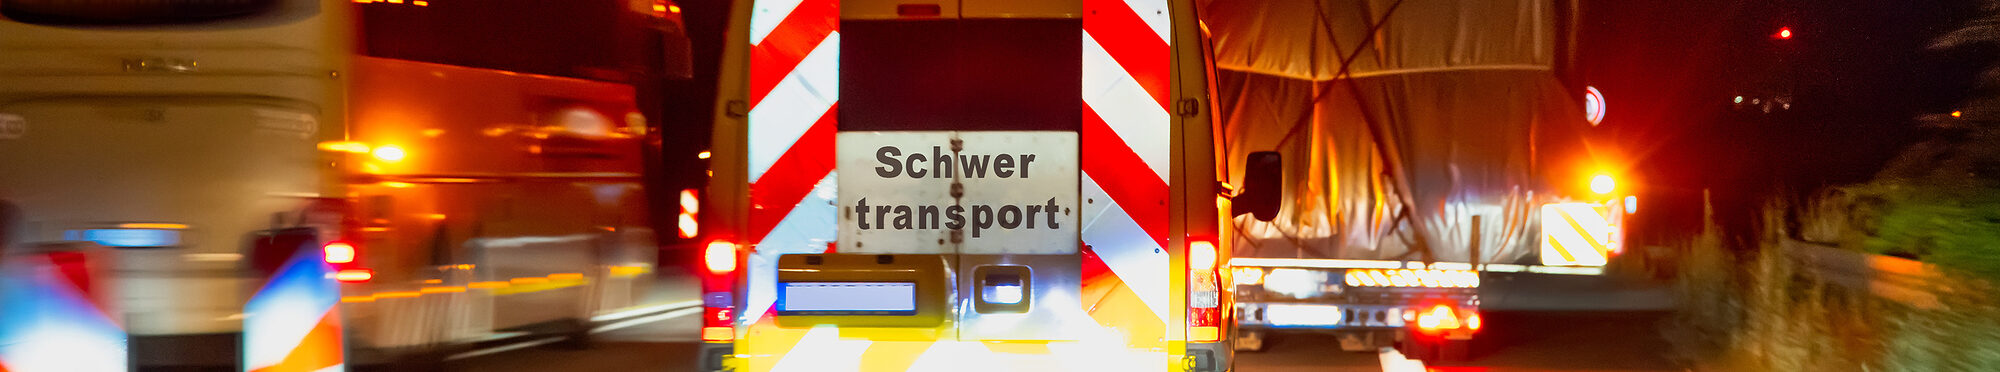 Motivbild Schwertransport [Foto: © EKH-Pictures - stock.adobe.com]